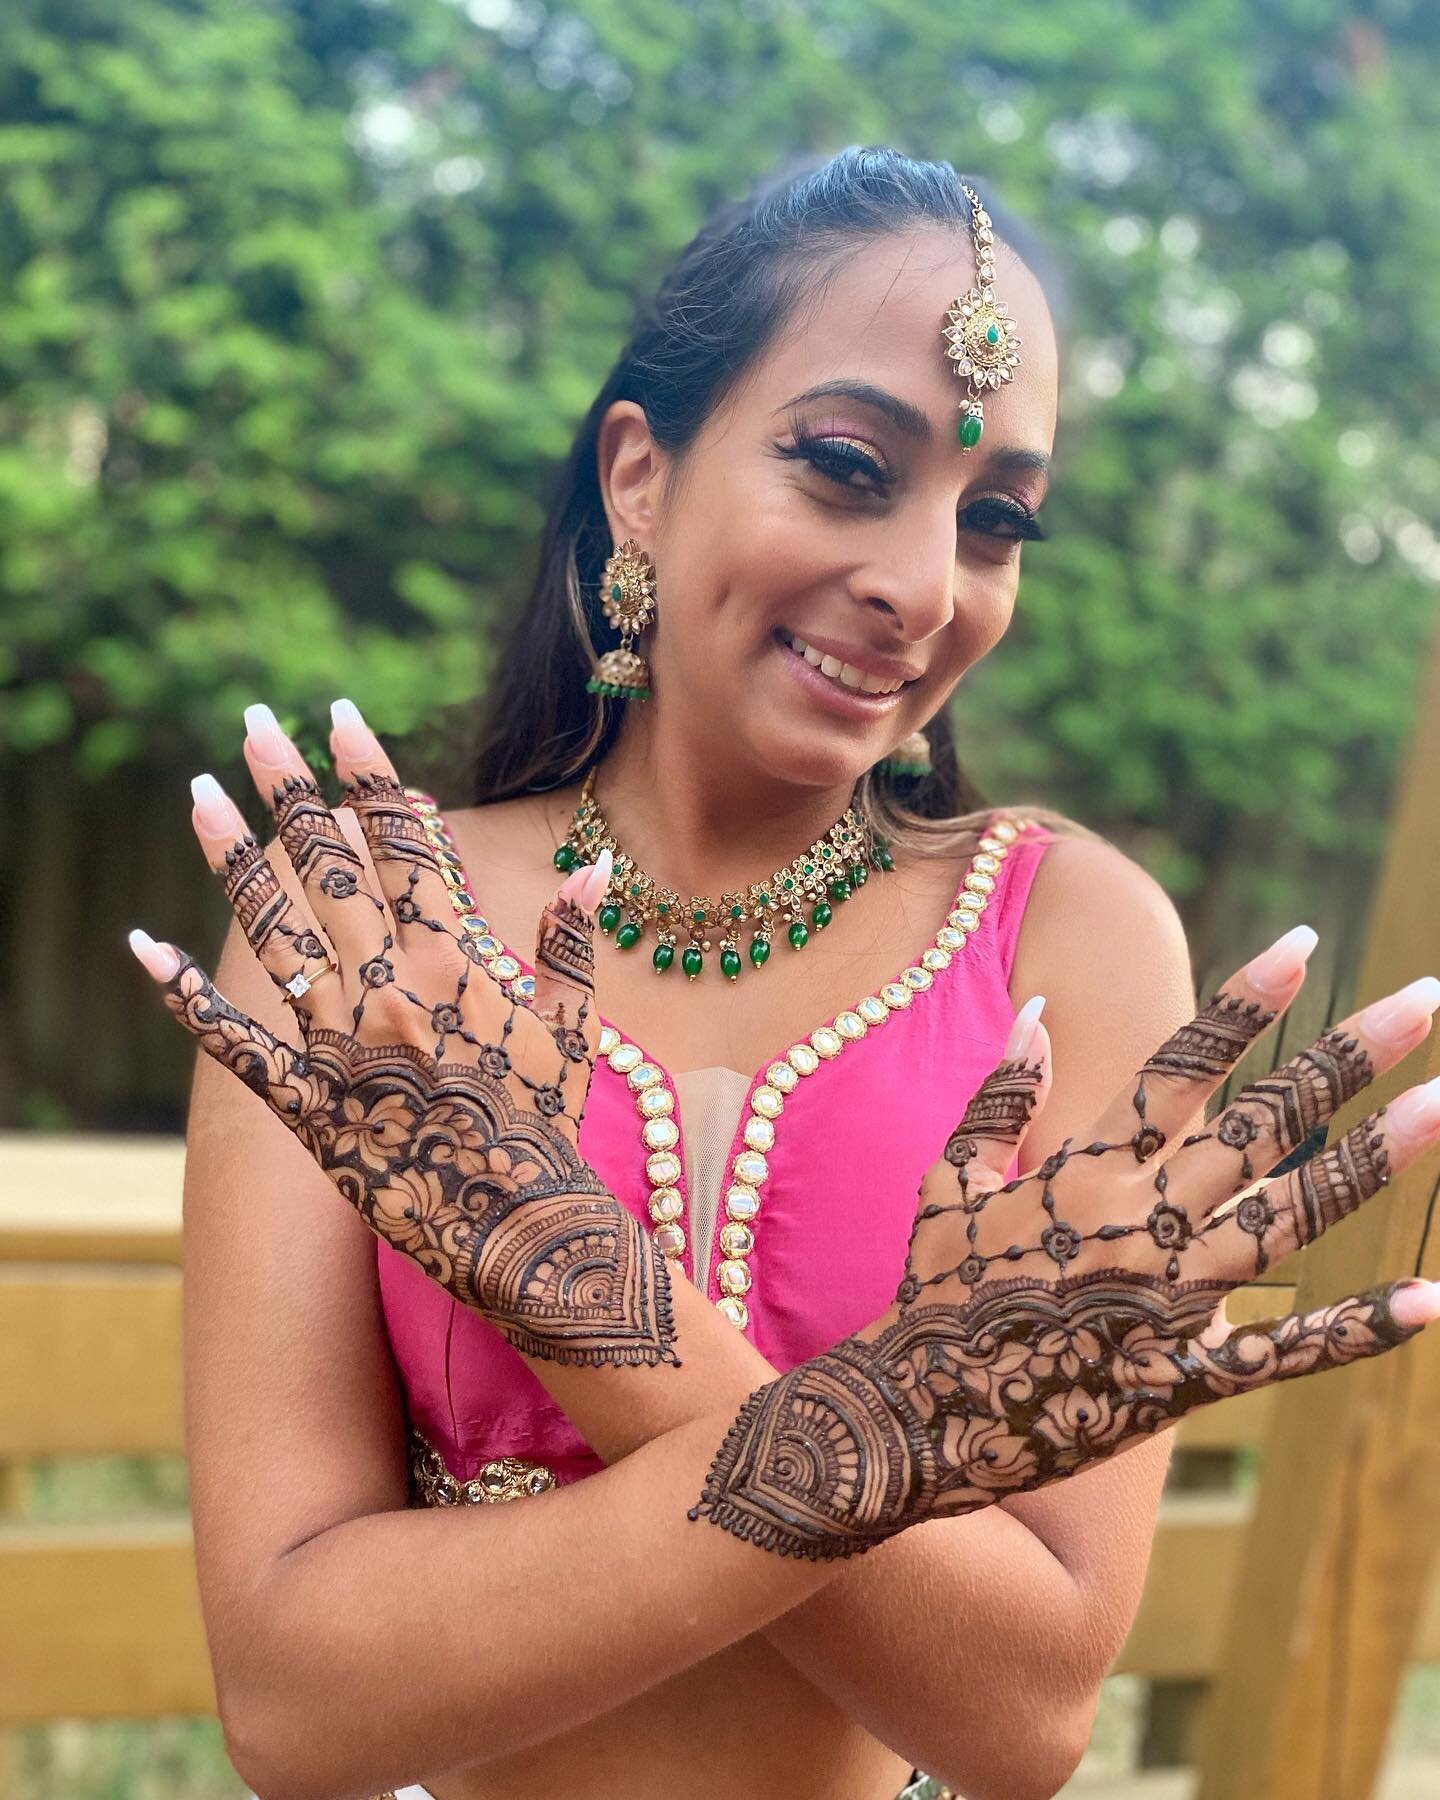 @jilli_nr &lsquo;s henna 💕✨

#torontohenna #bridalhenna #touchofdimple #wedmegood #southasianweddings #torontowedding #hennadesign #henna